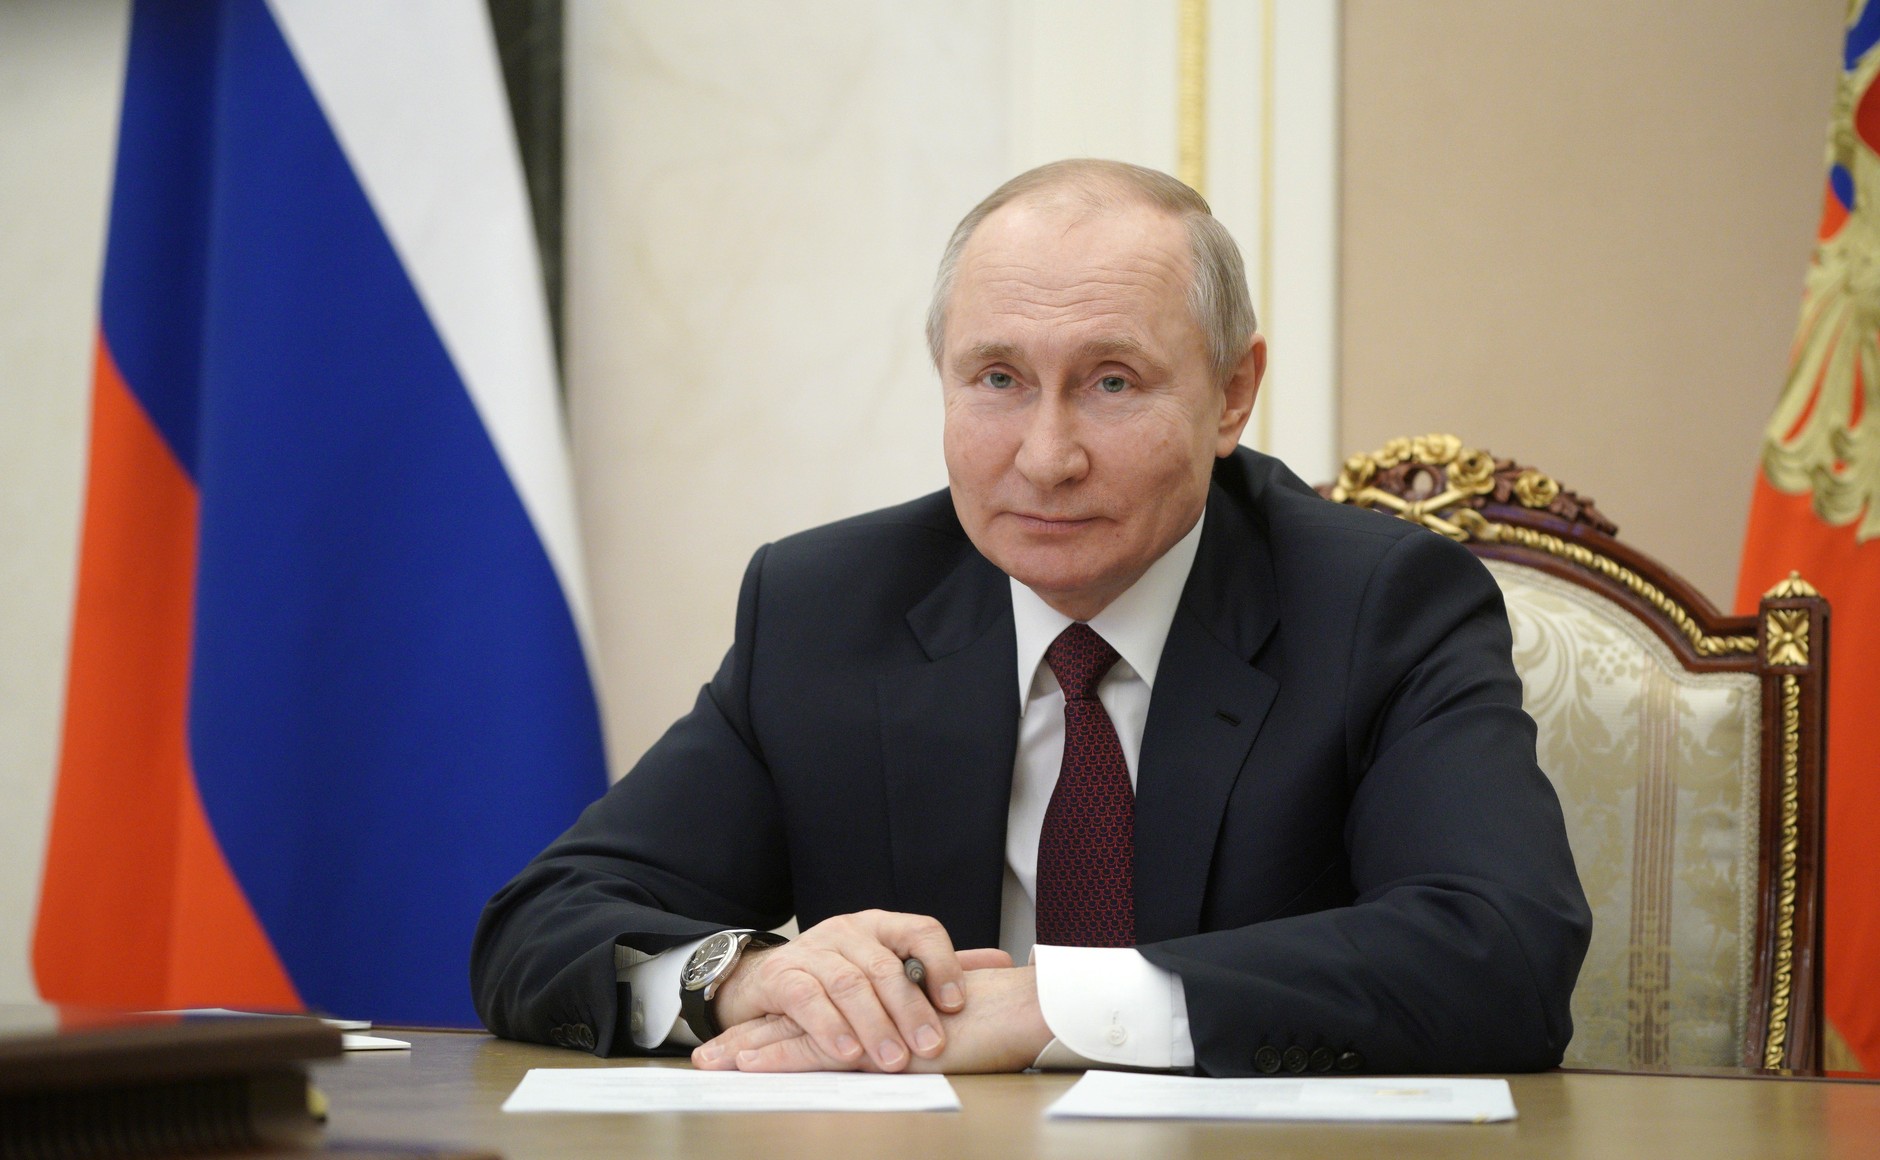 Putin sitter ved en pult med det russiske flagget bak seg.